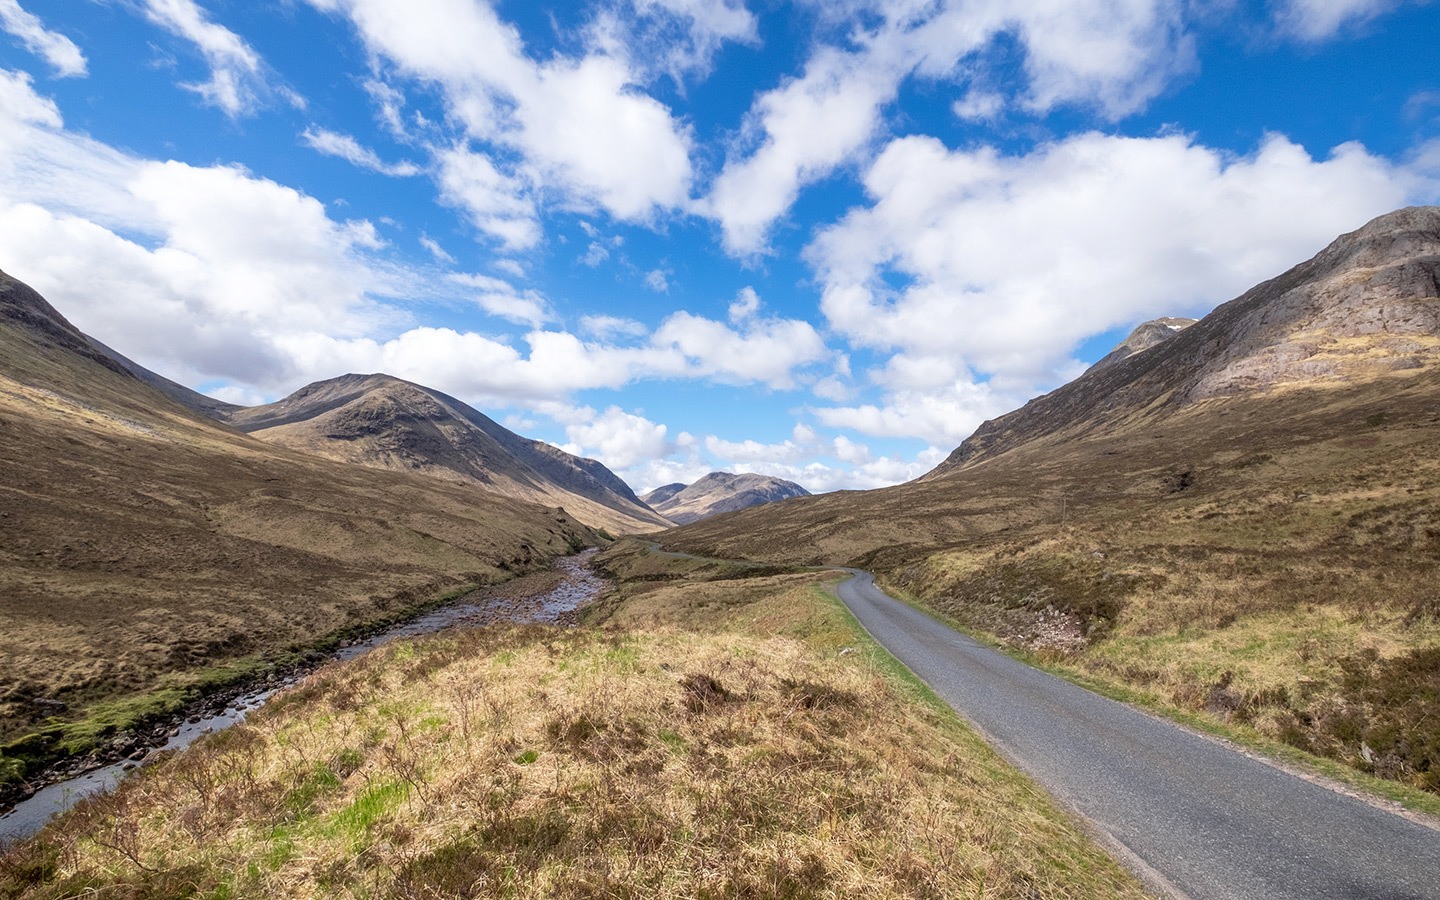 Driving the scenic Glen Etive Road in Scotland